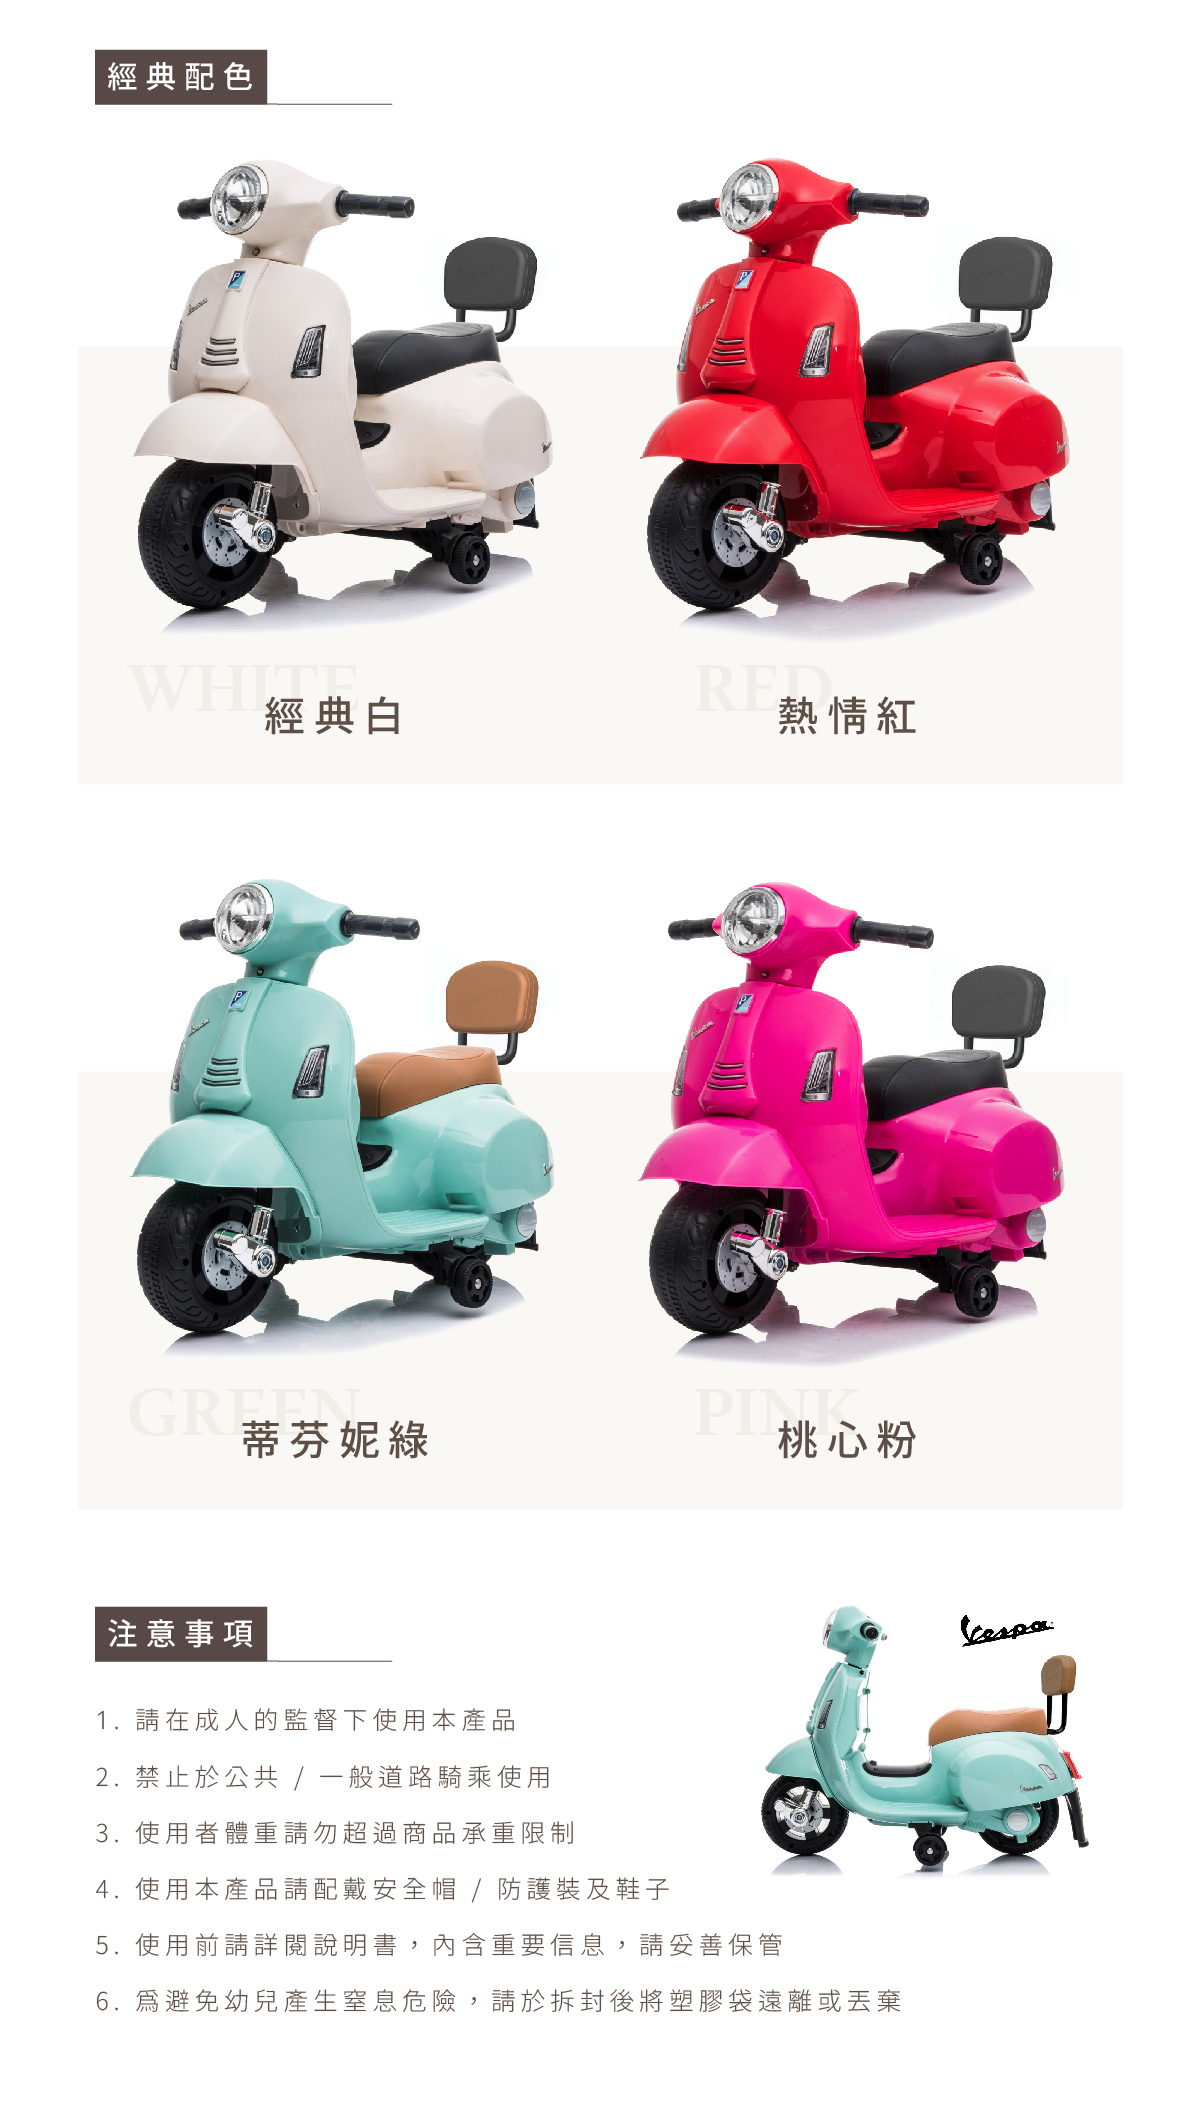 [Vespa] Electric toy car backrest model - 3 colors available